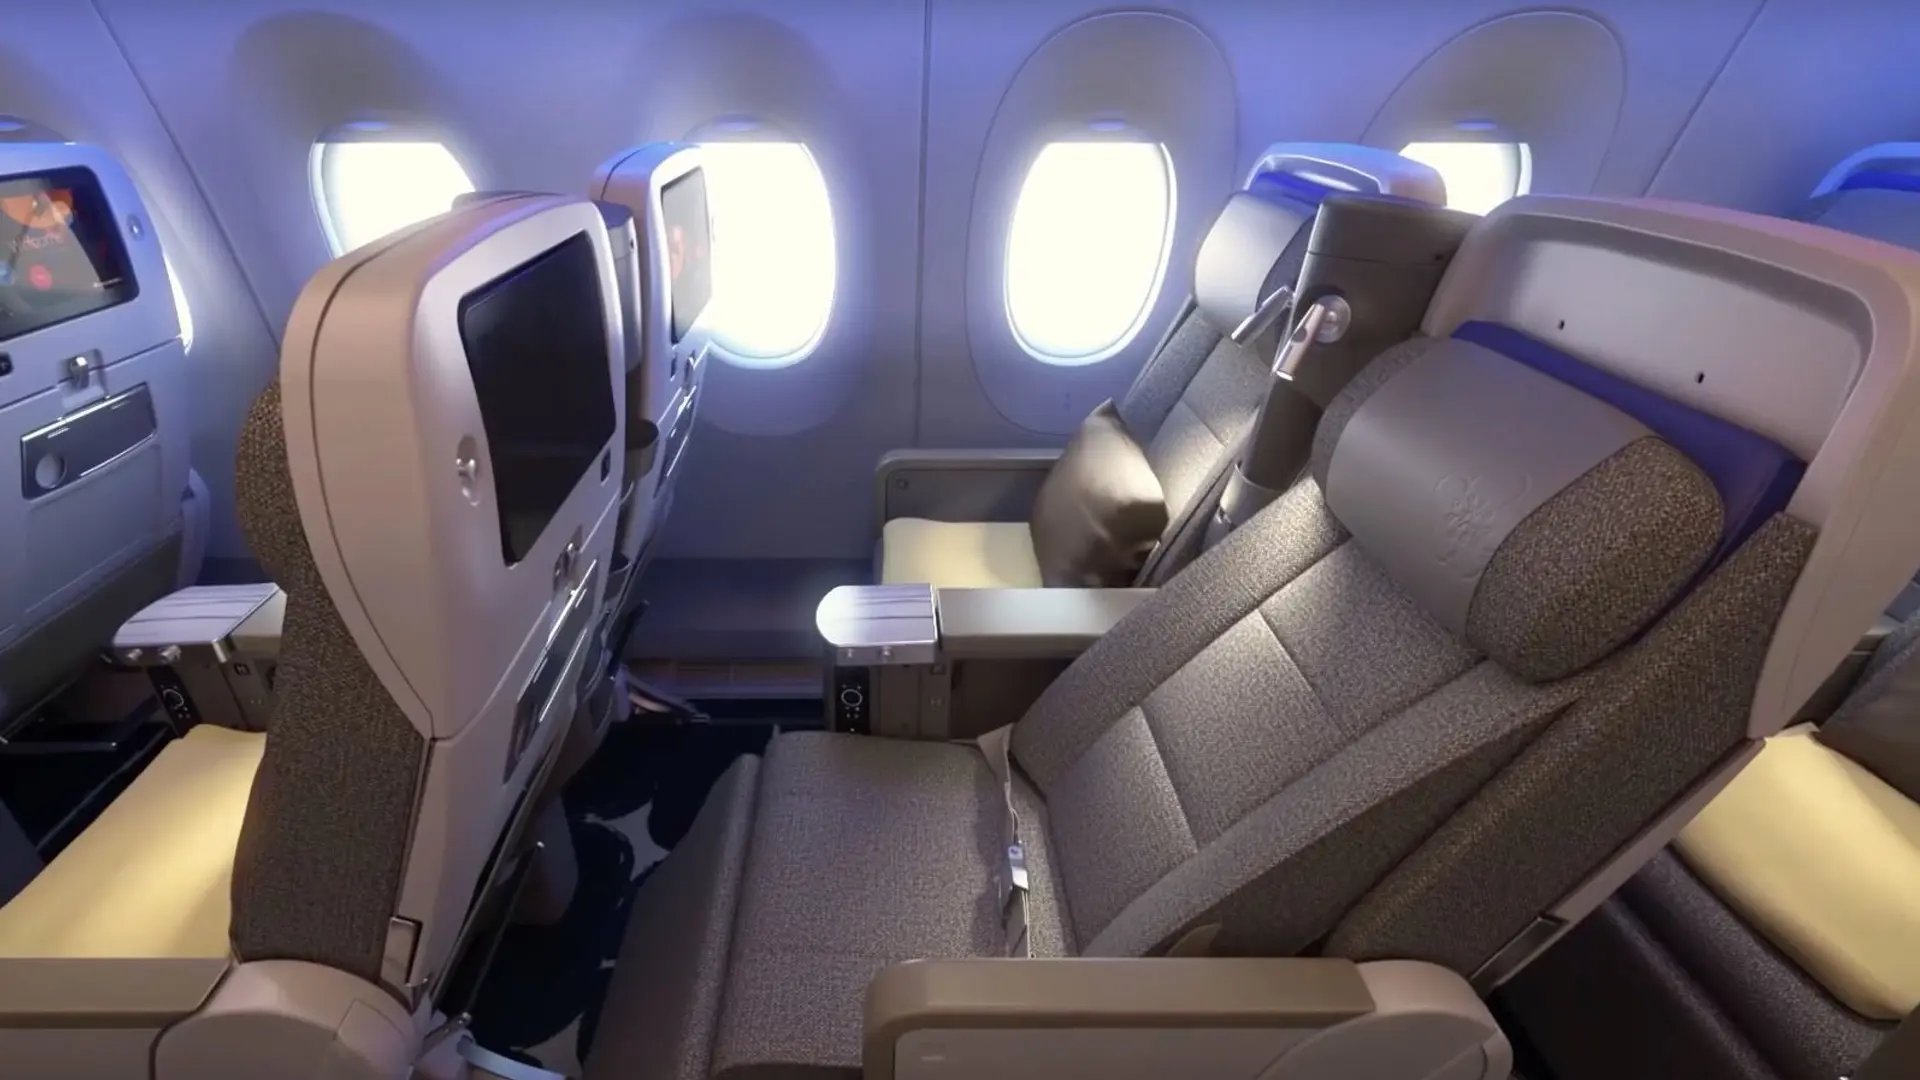 China Airlines Premium Economy Seats